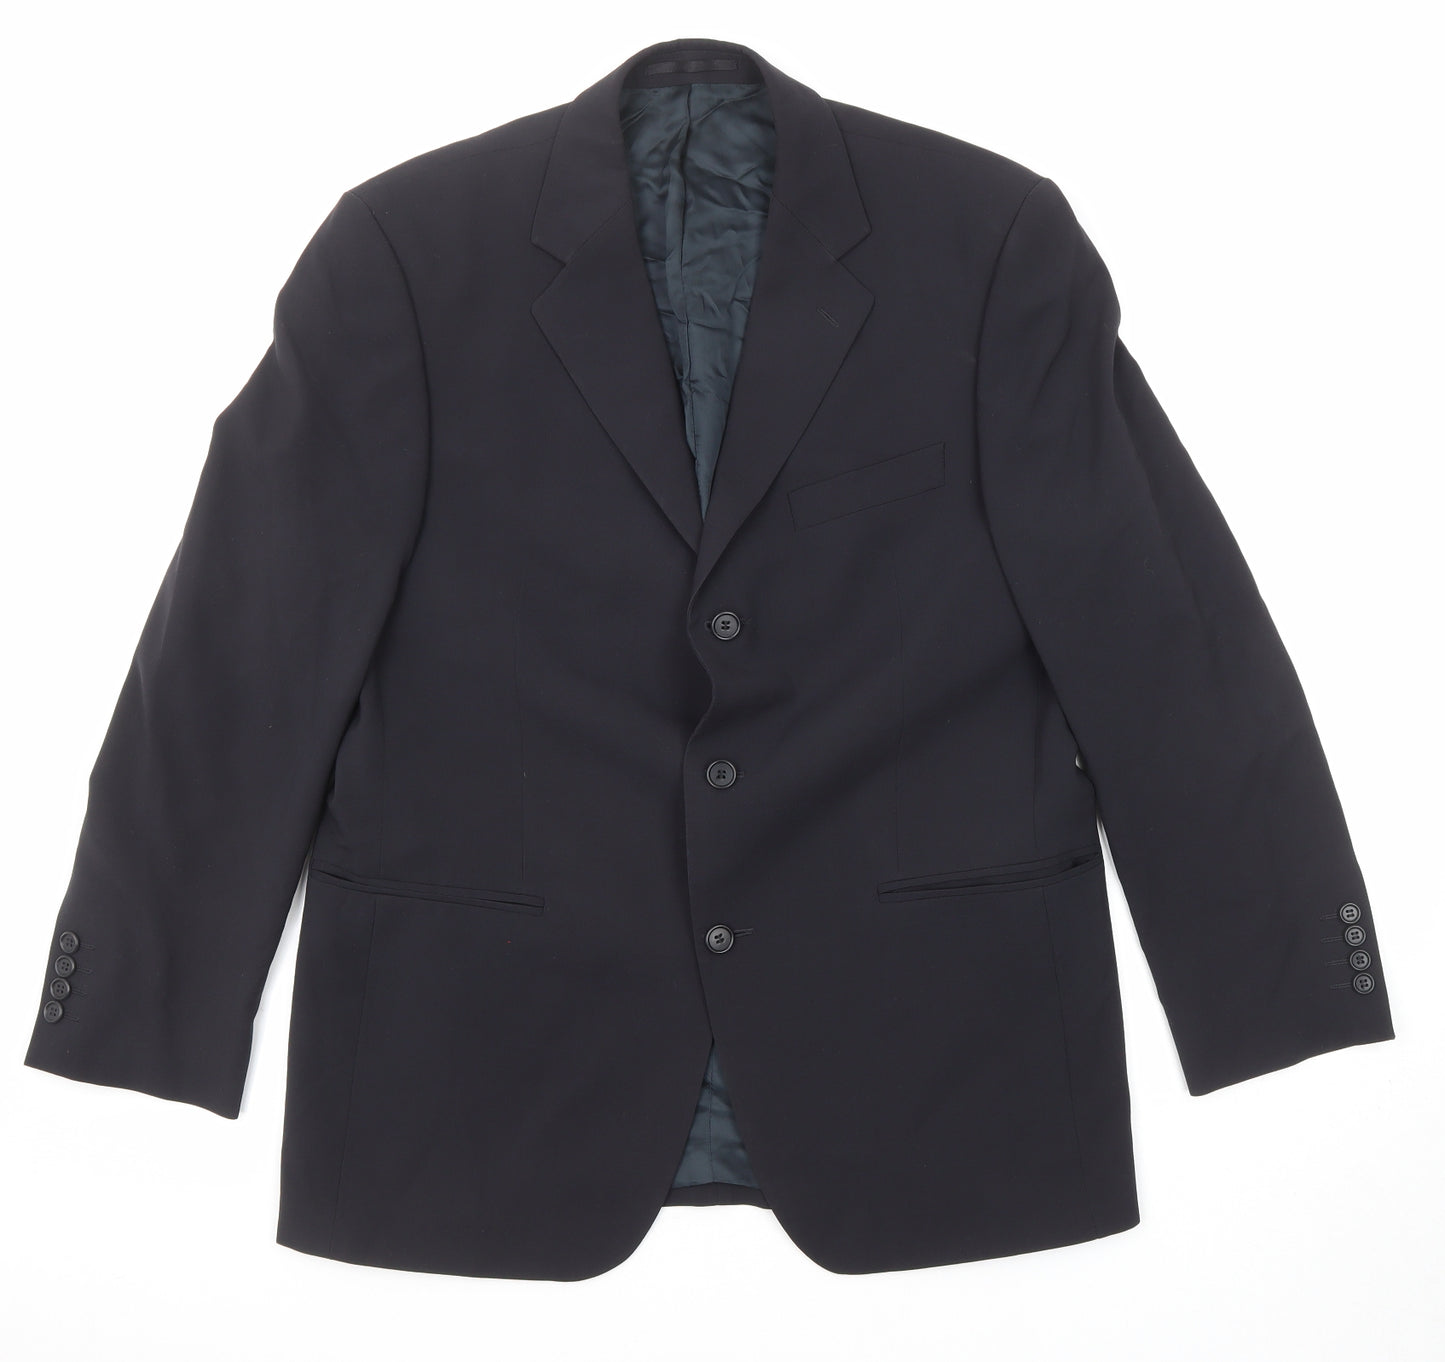 Magee Mens Black Wool Jacket Suit Jacket Size 40 Regular